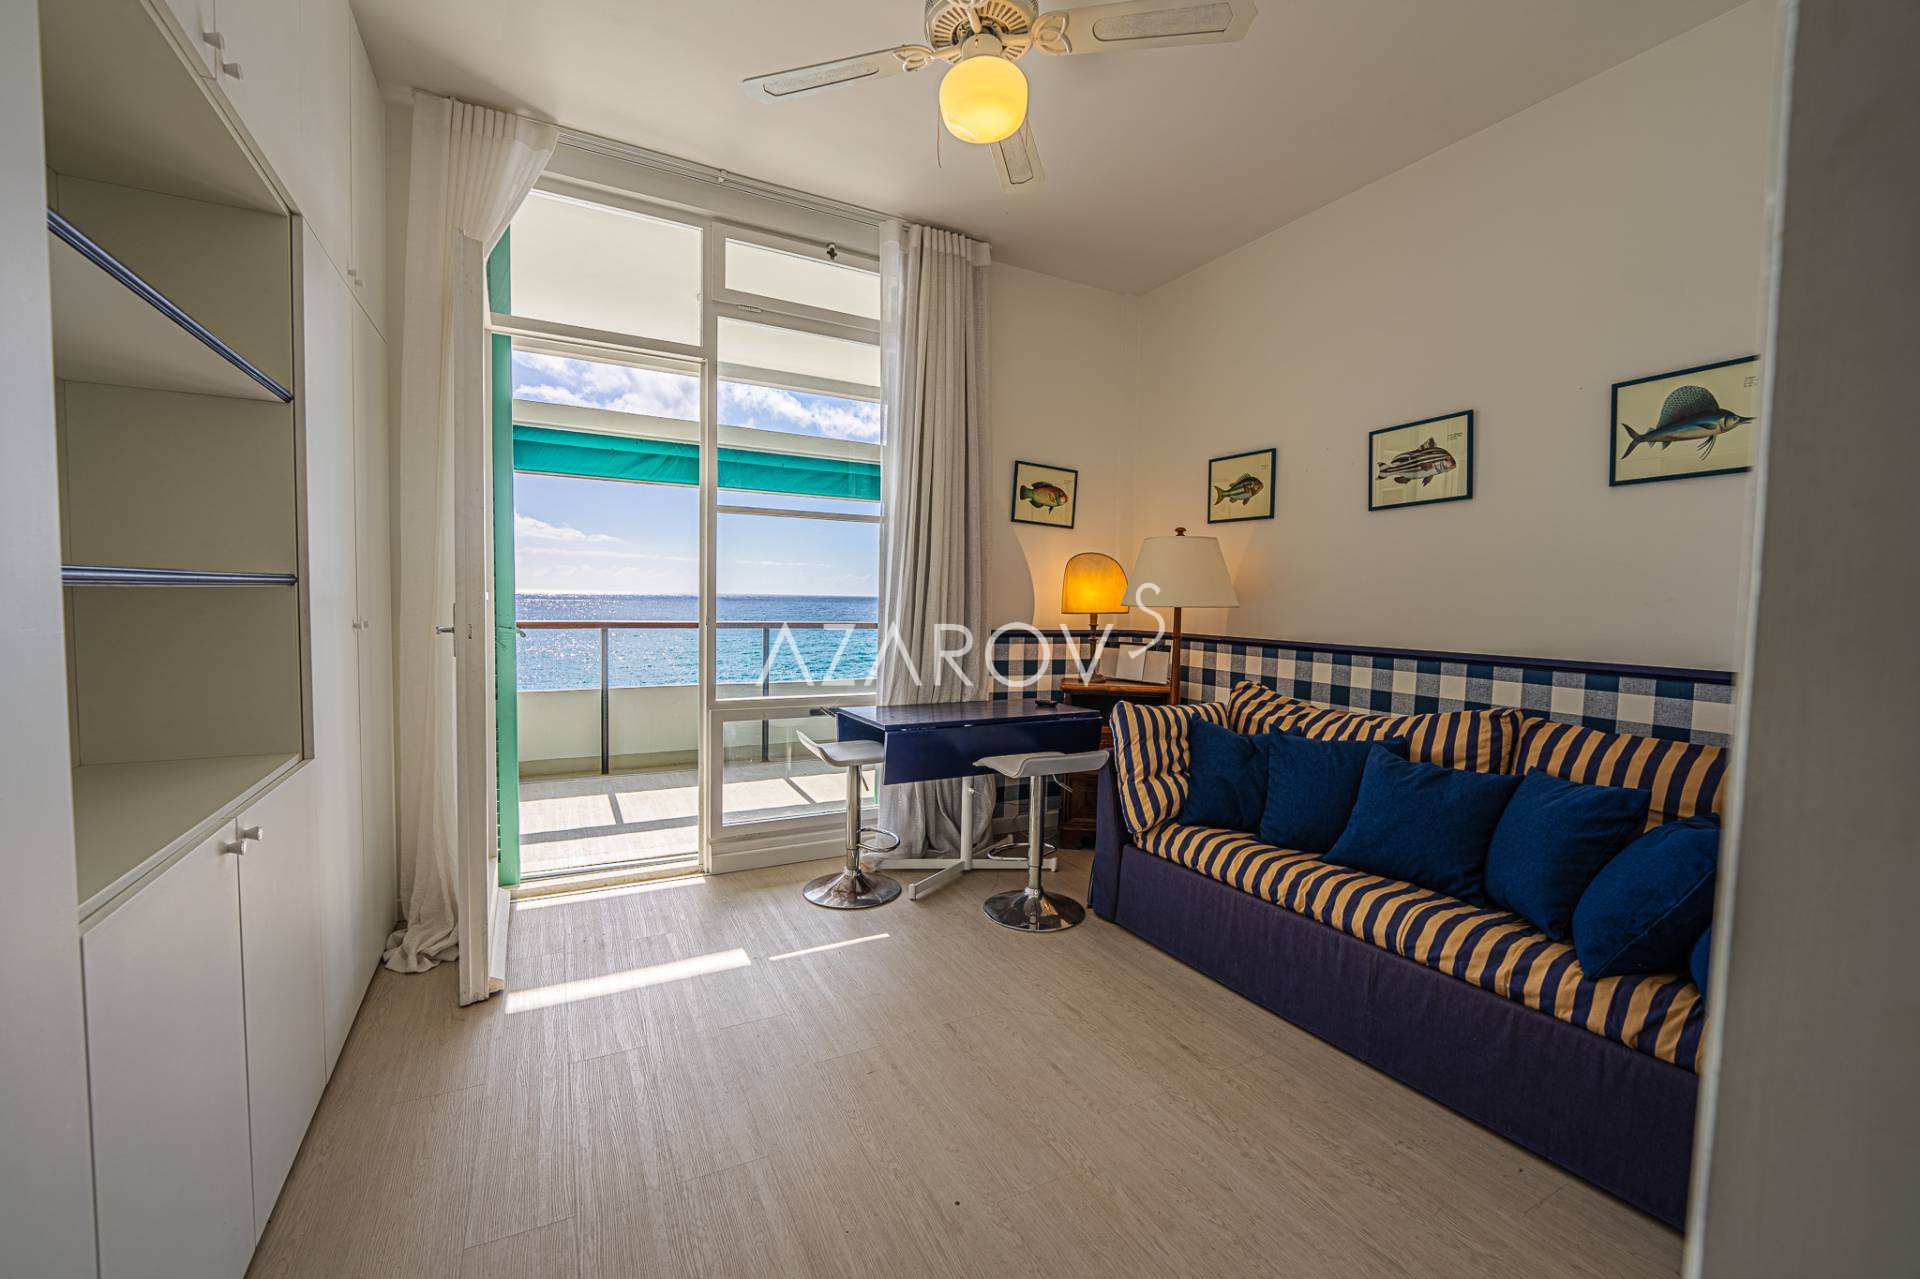 Appartamento a Sanremo vicino al mare